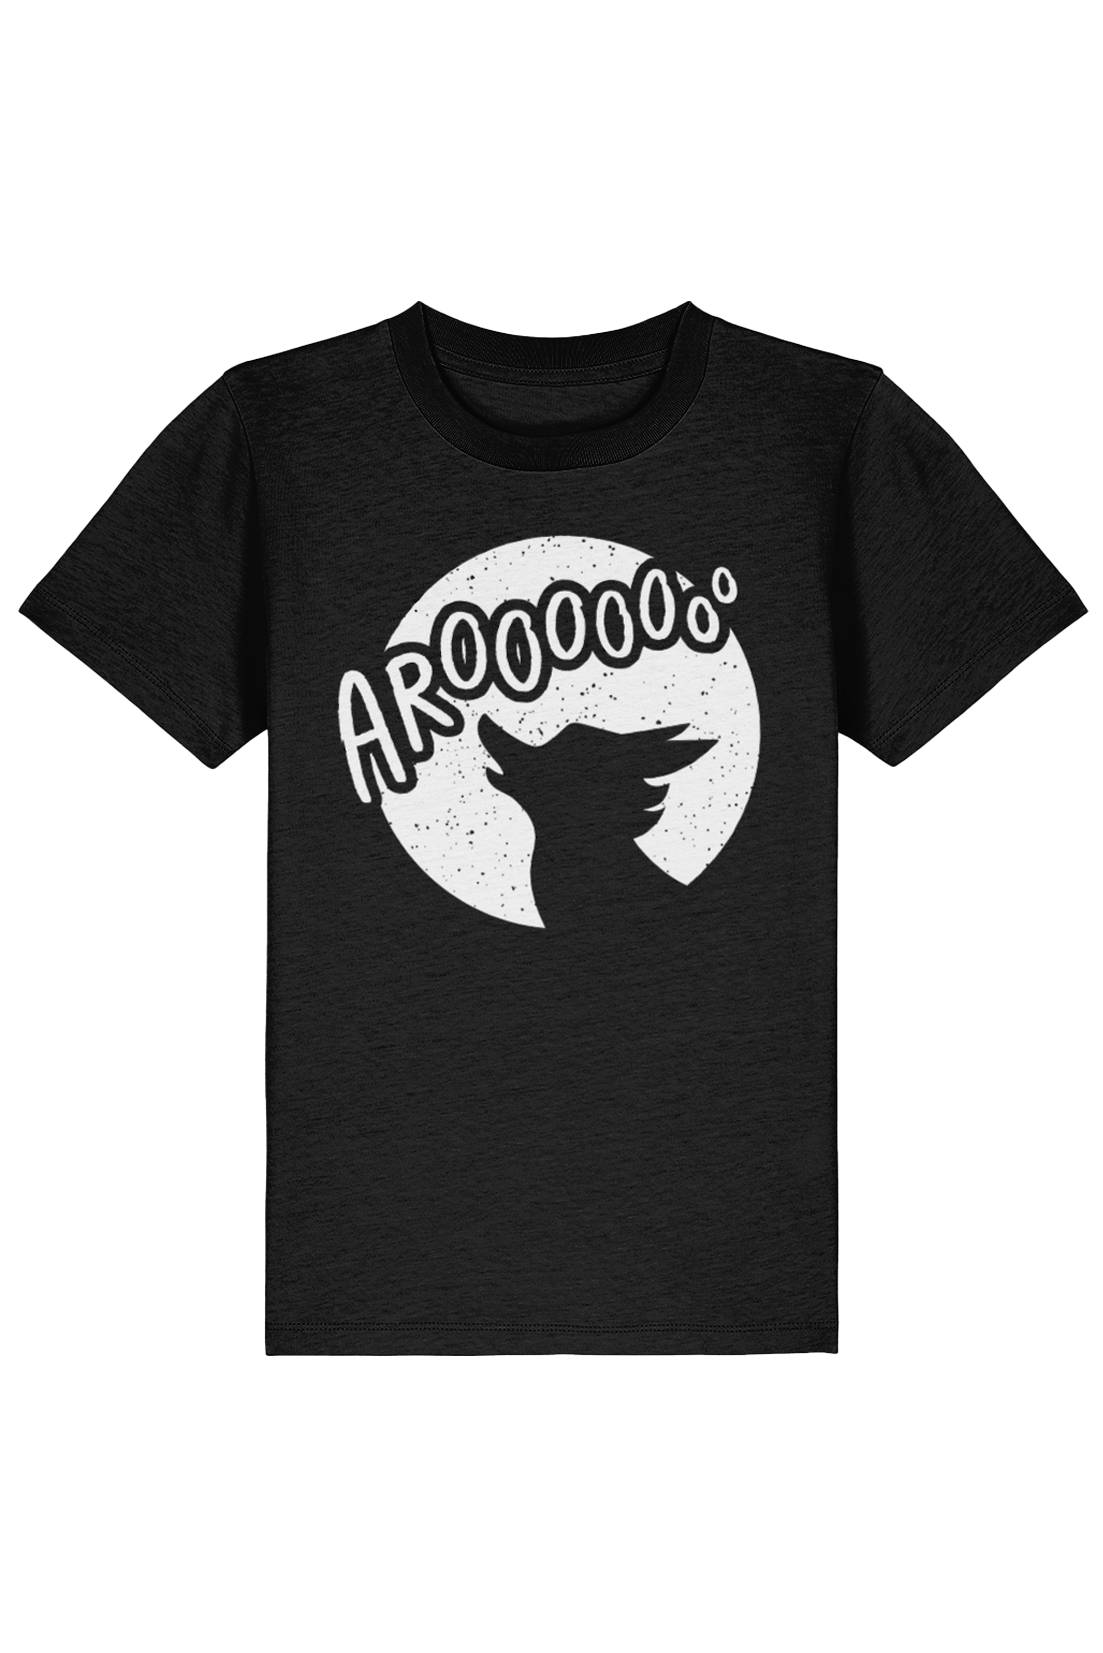 The Pack Aroo kids t-shirt